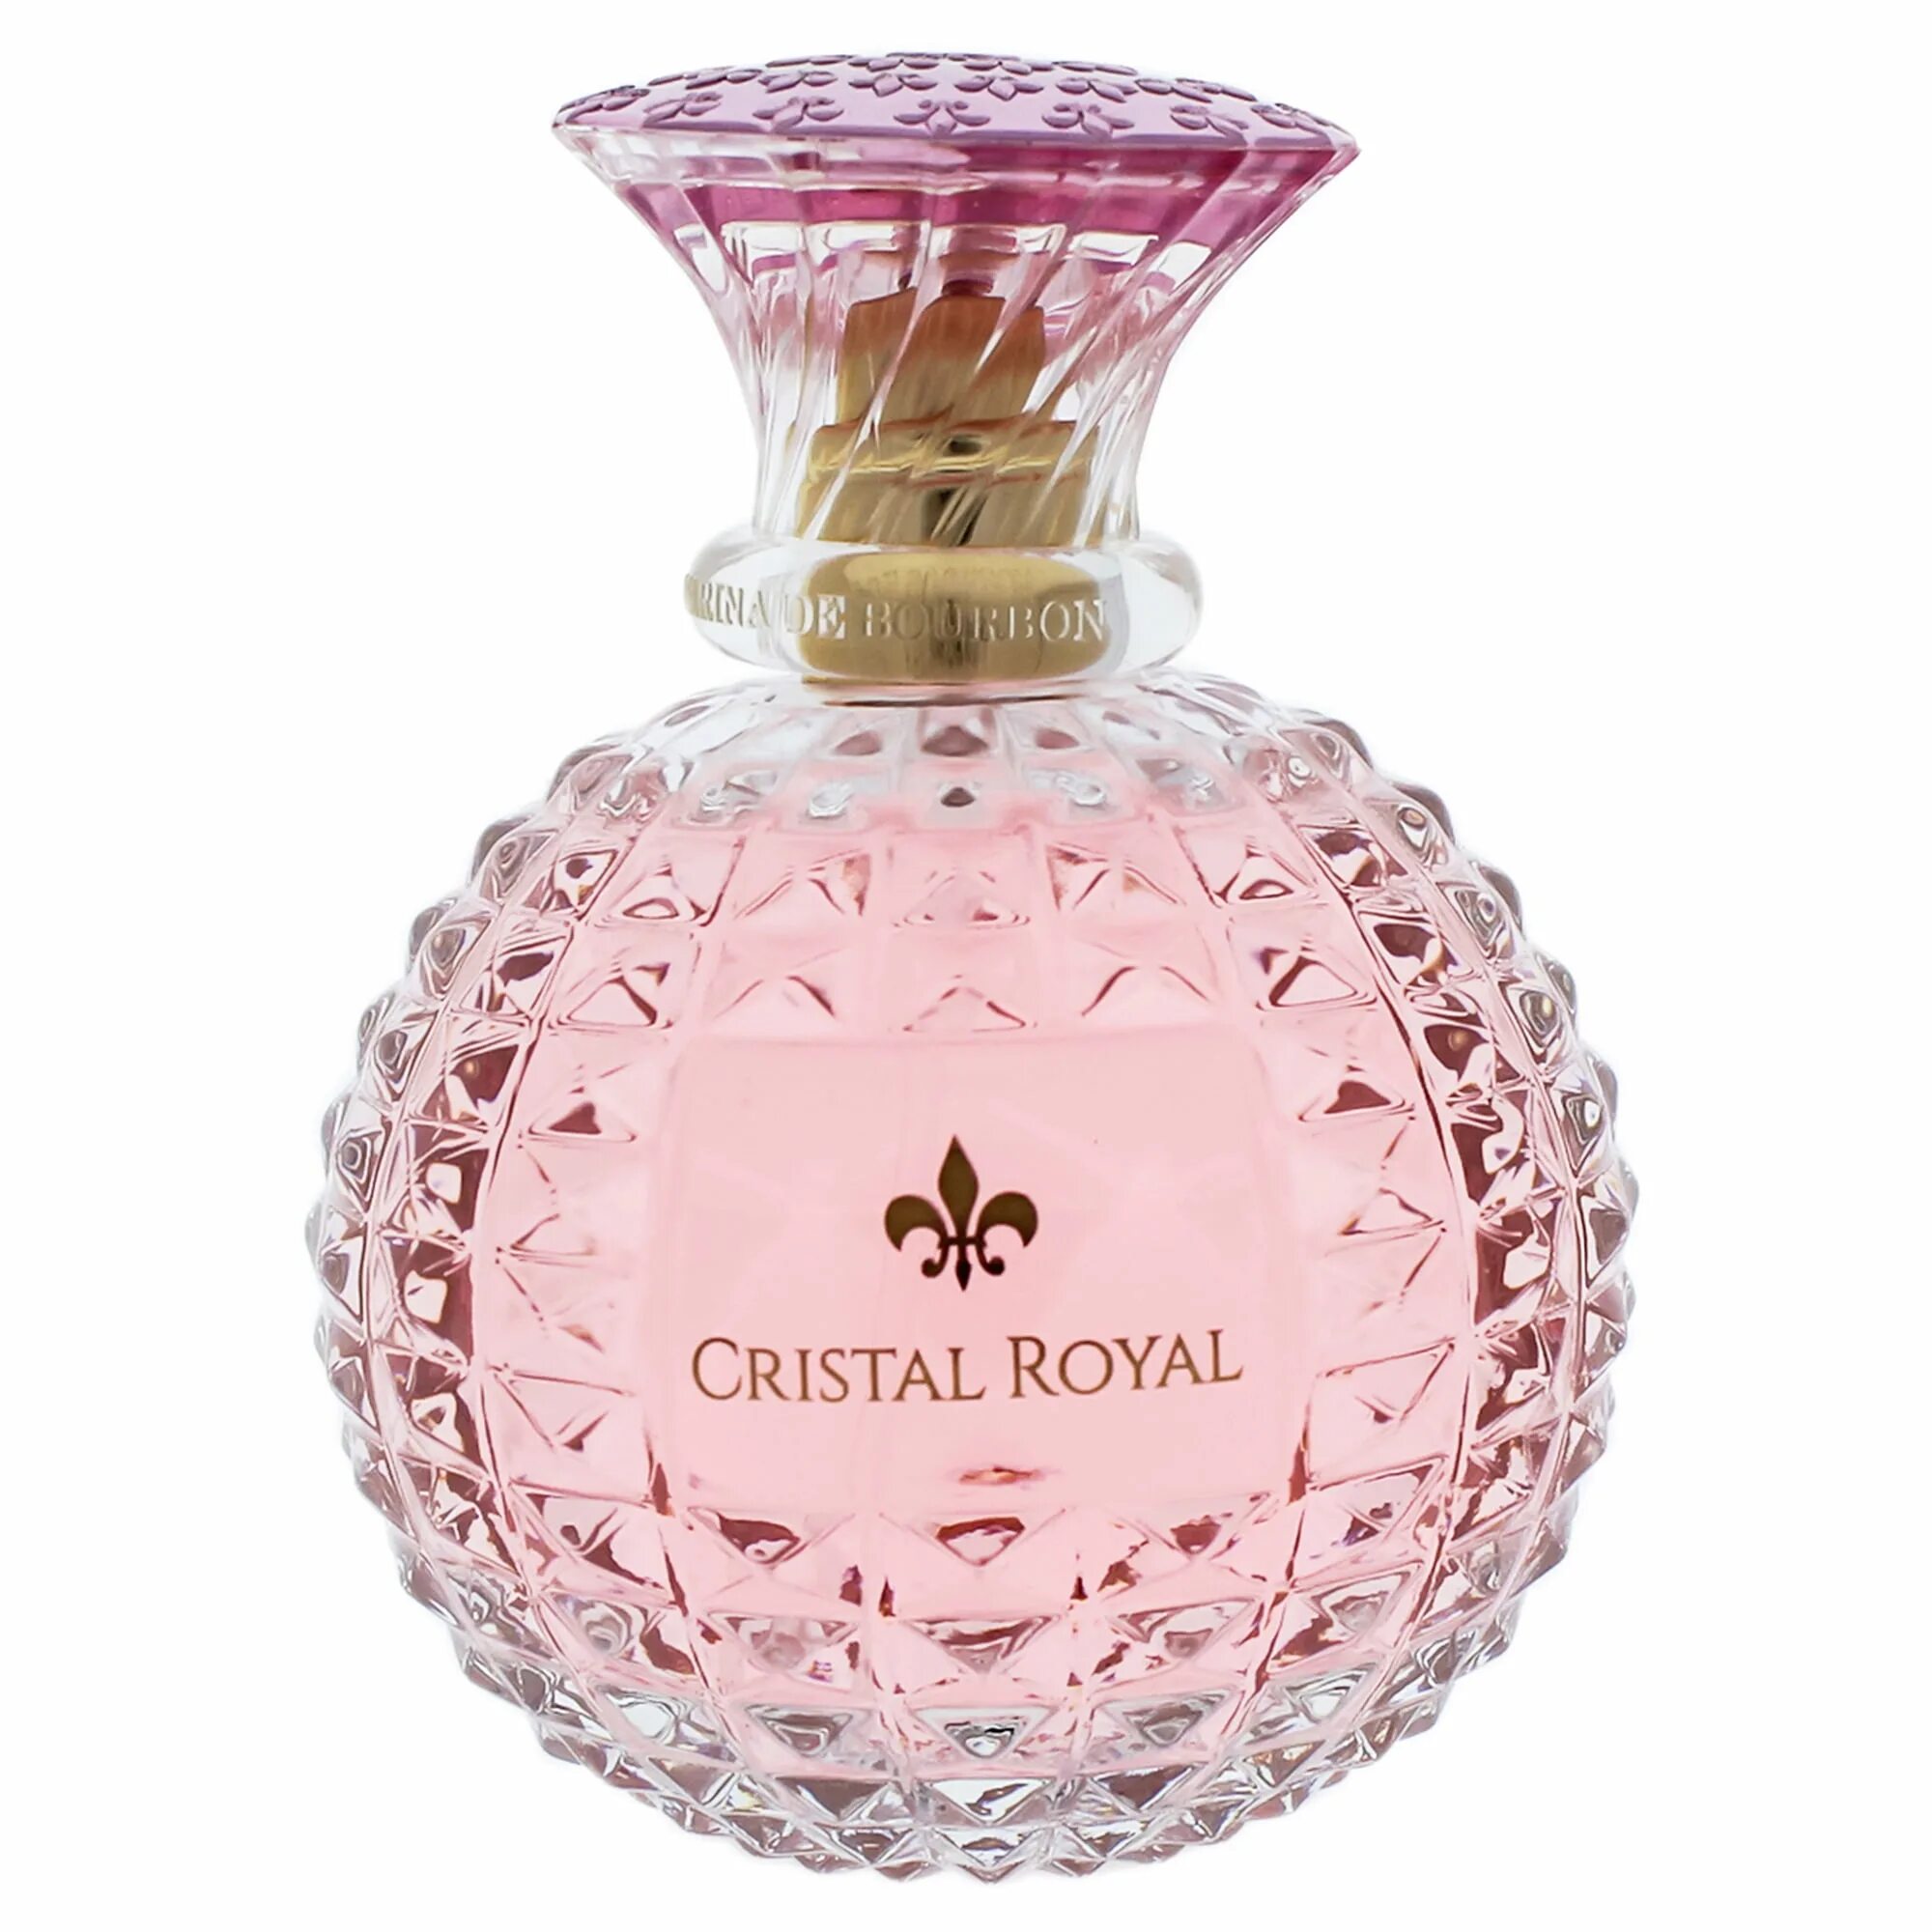 Marina de Bourbon Crystal Royal Rose. M. de Bourbon Cristal Royal Rose w EDP 100 ml Tester. M. de Bourbon Cristal Royal w EDP 100 ml [m].